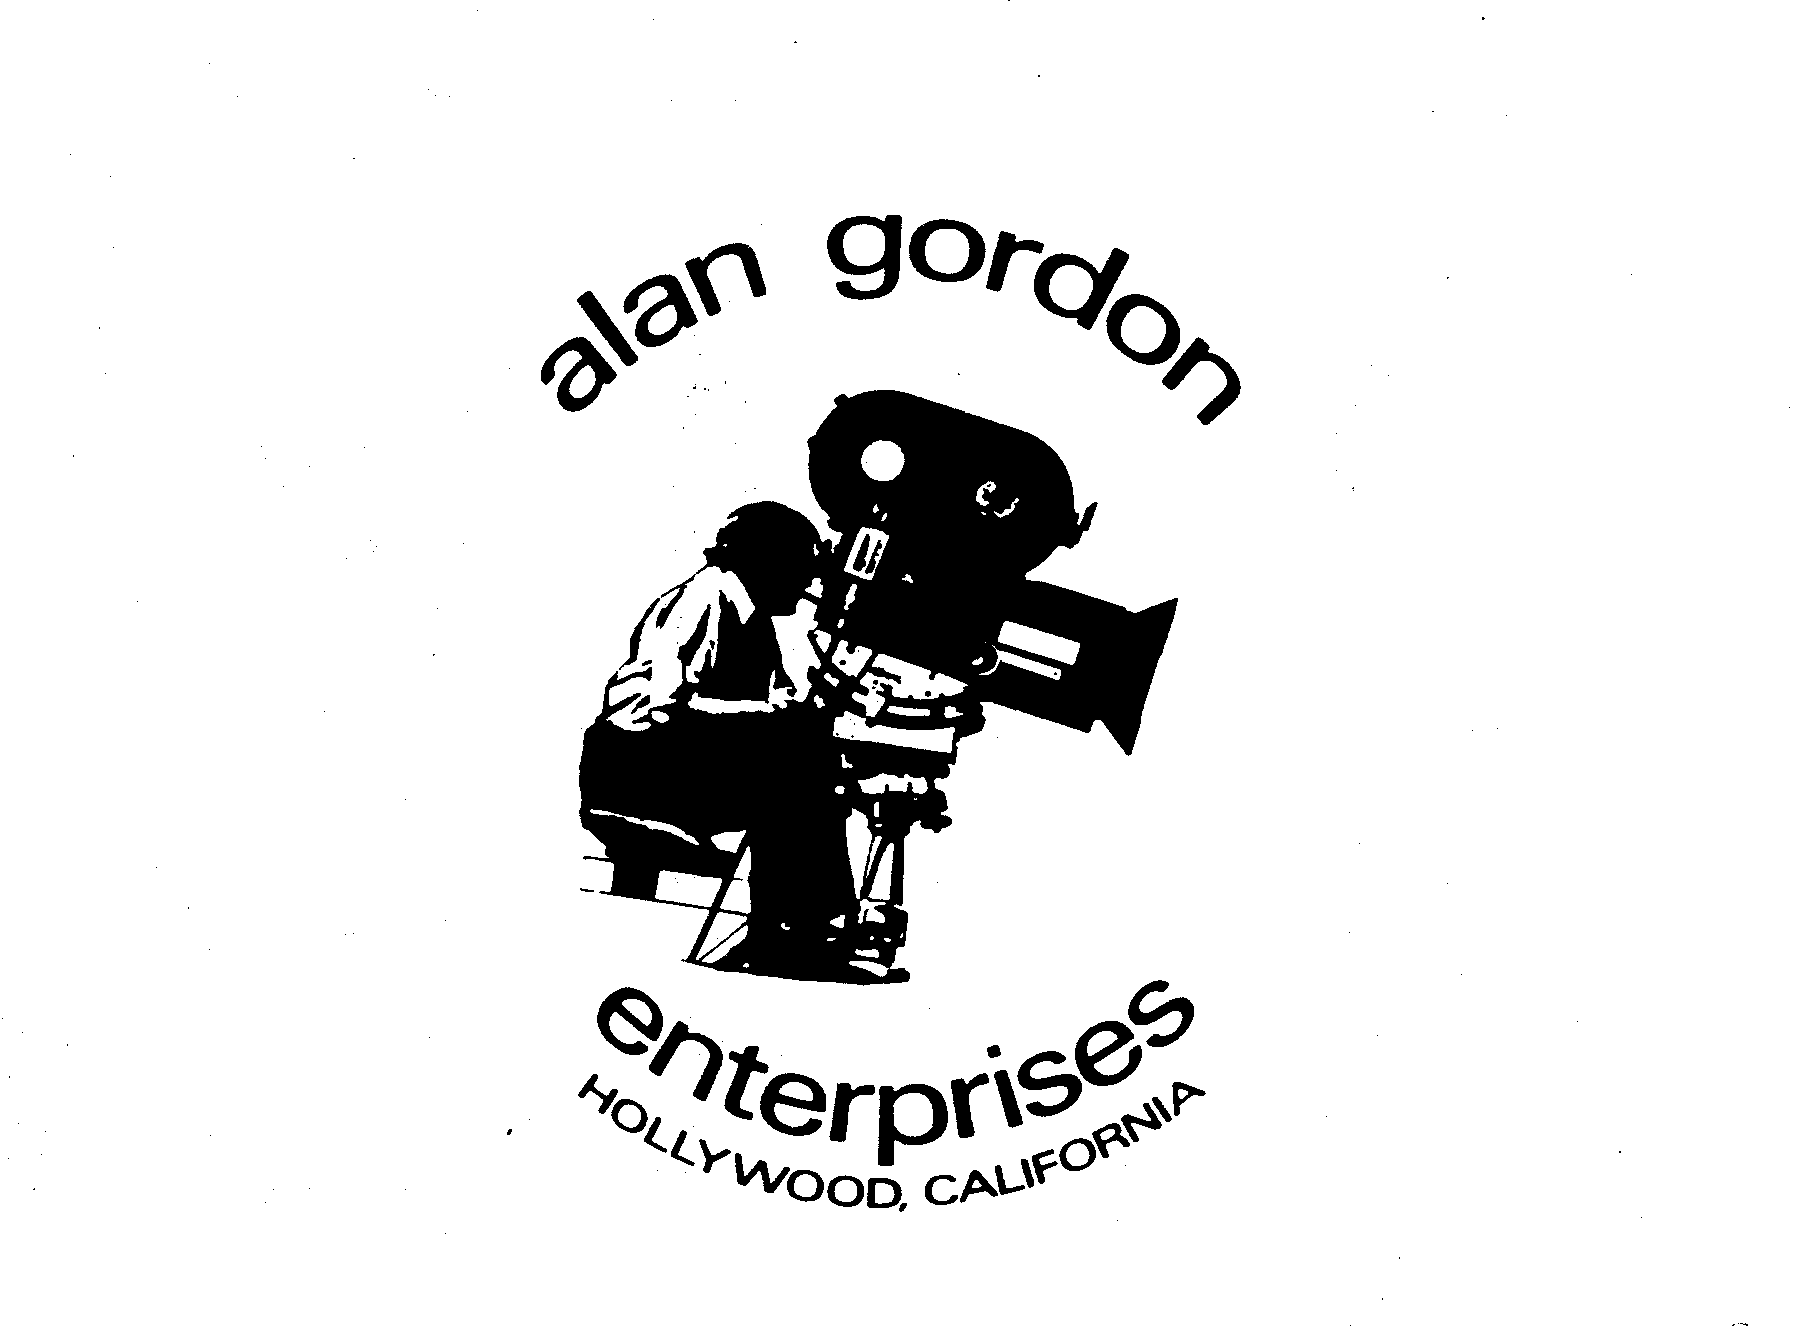  ALAN GORDON ENTERPRISES HOLLYWOOD, CALIFORNIA